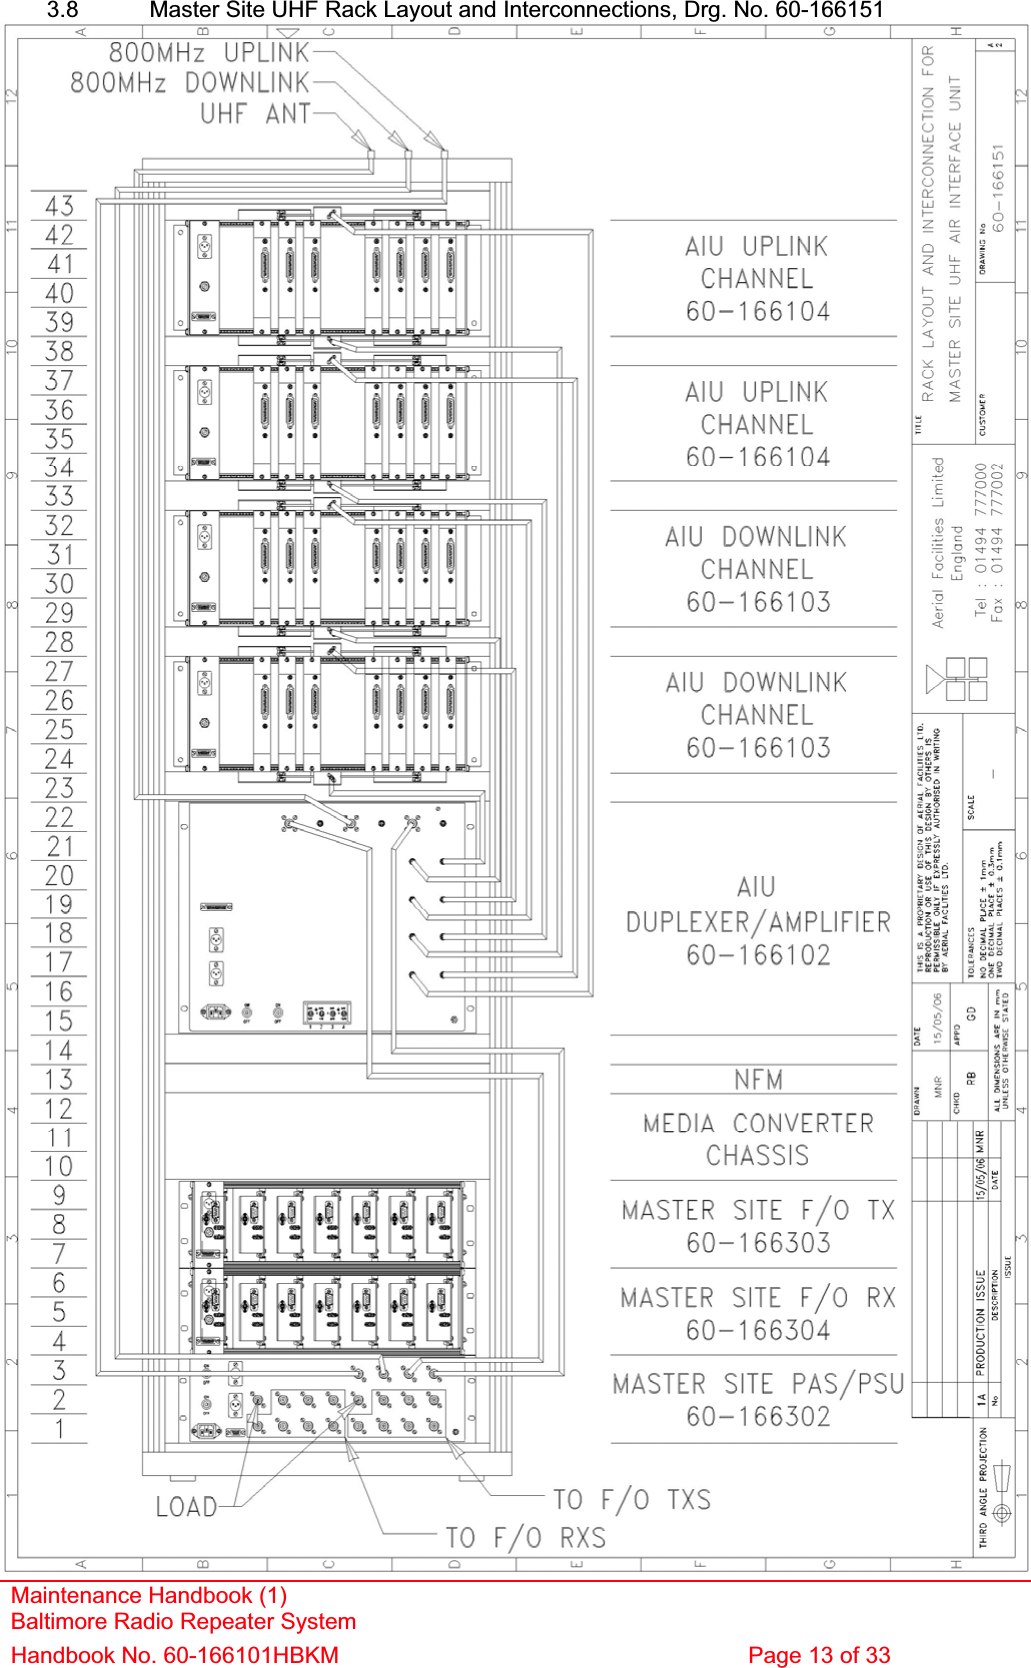 3.8  Master Site UHF Rack Layout and Interconnections, Drg. No. 60-166151 Maintenance Handbook (1) Baltimore Radio Repeater System Handbook No. 60-166101HBKM  Page 13 of 33 